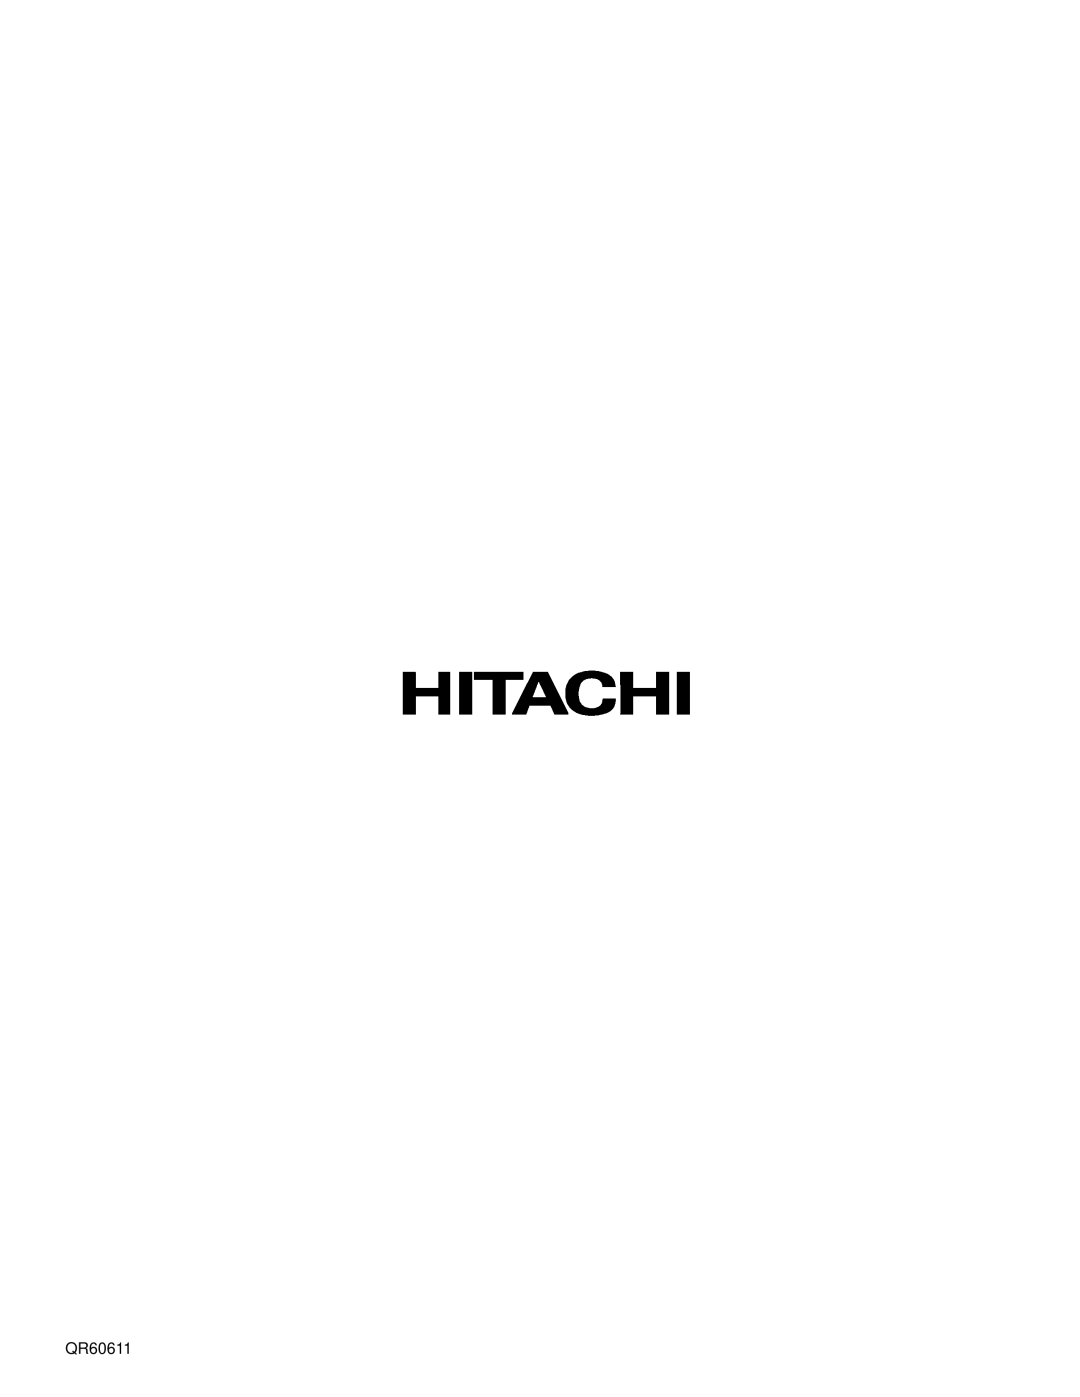 Hitachi 57F510 important safety instructions QR60611 